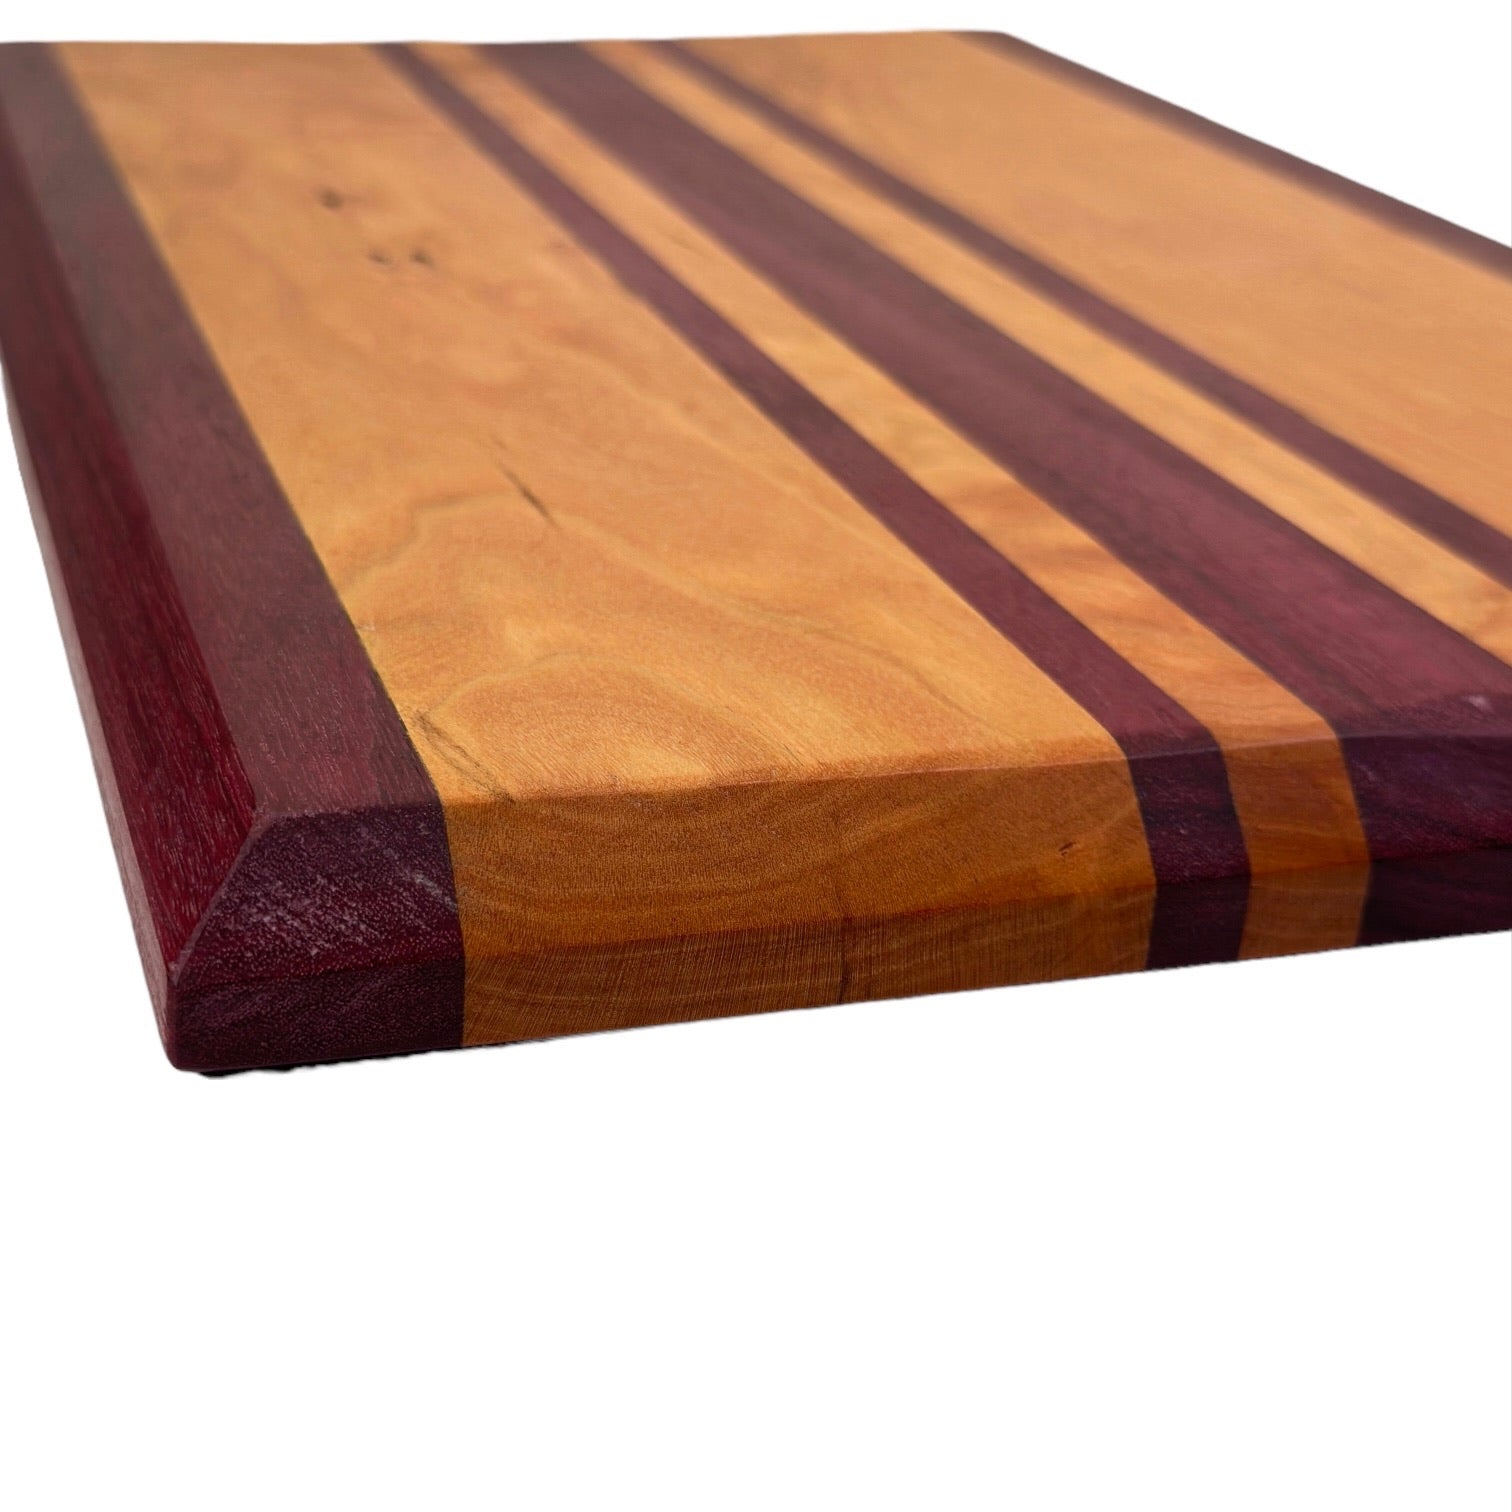 Cherry and Purple Heart - Handmade Wood Cutting Board - RTS edge bevel view